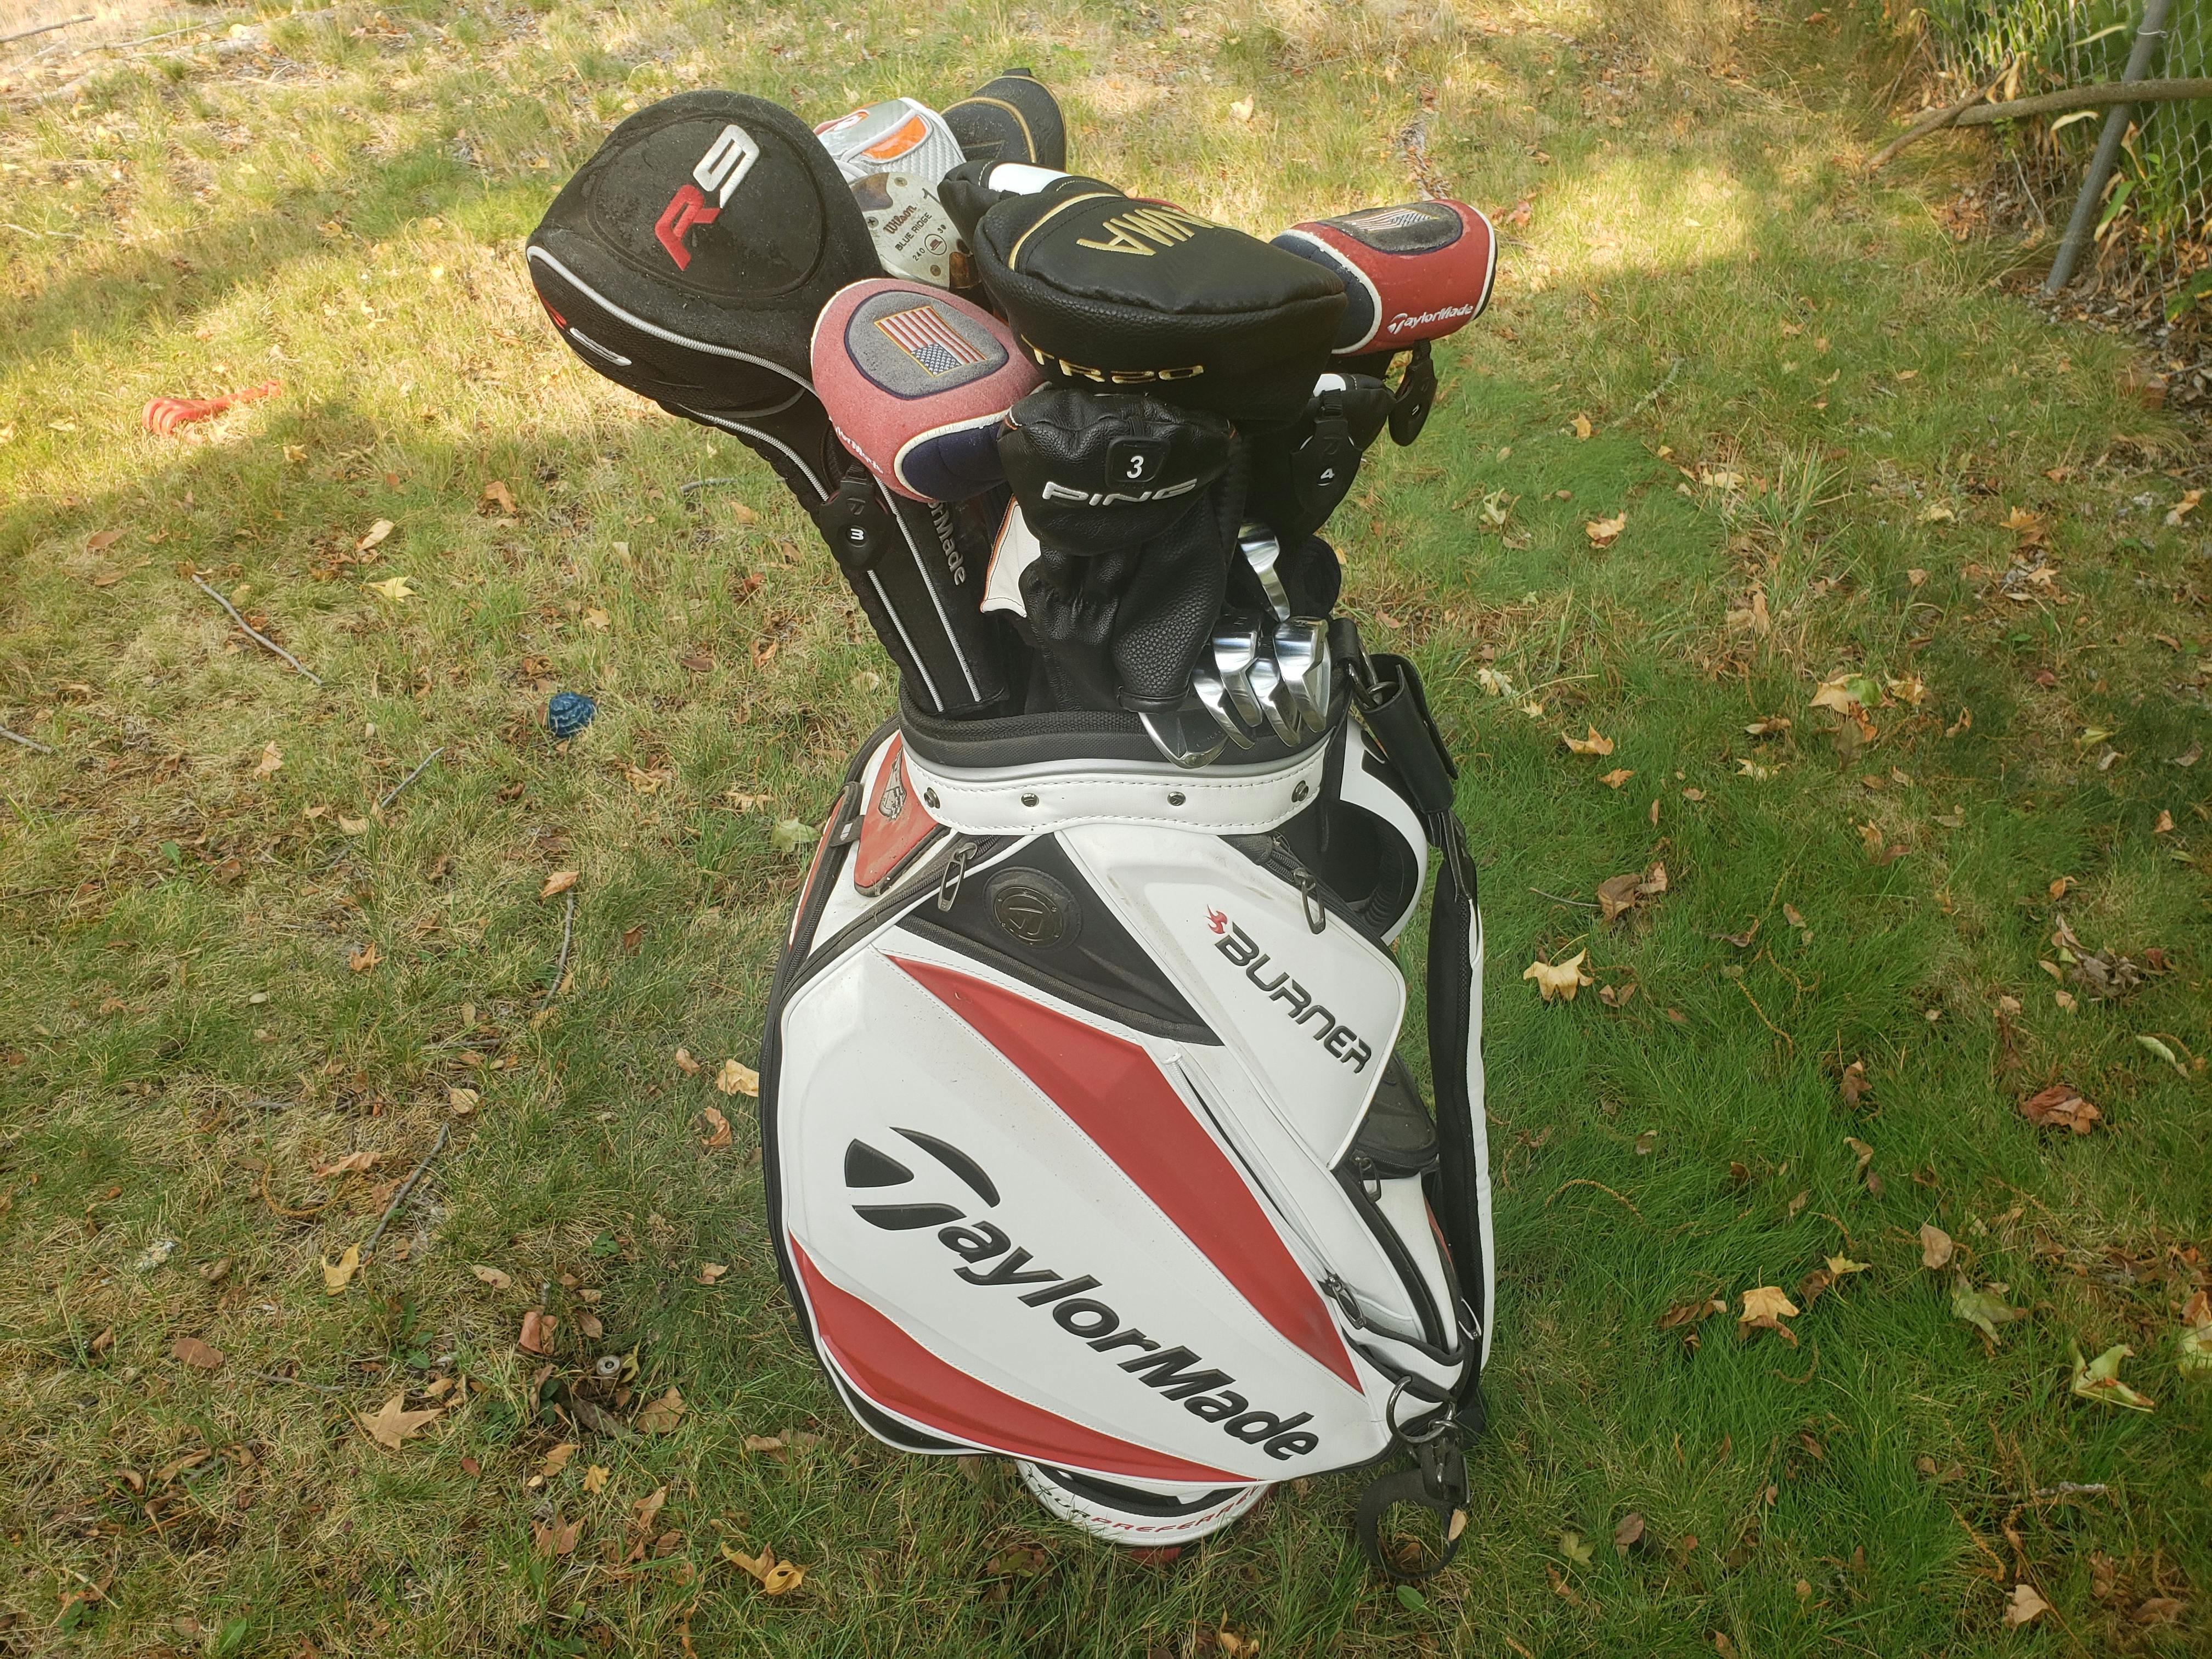 Choosing The Correct Golf Bag - The Golf Shop Online Blog